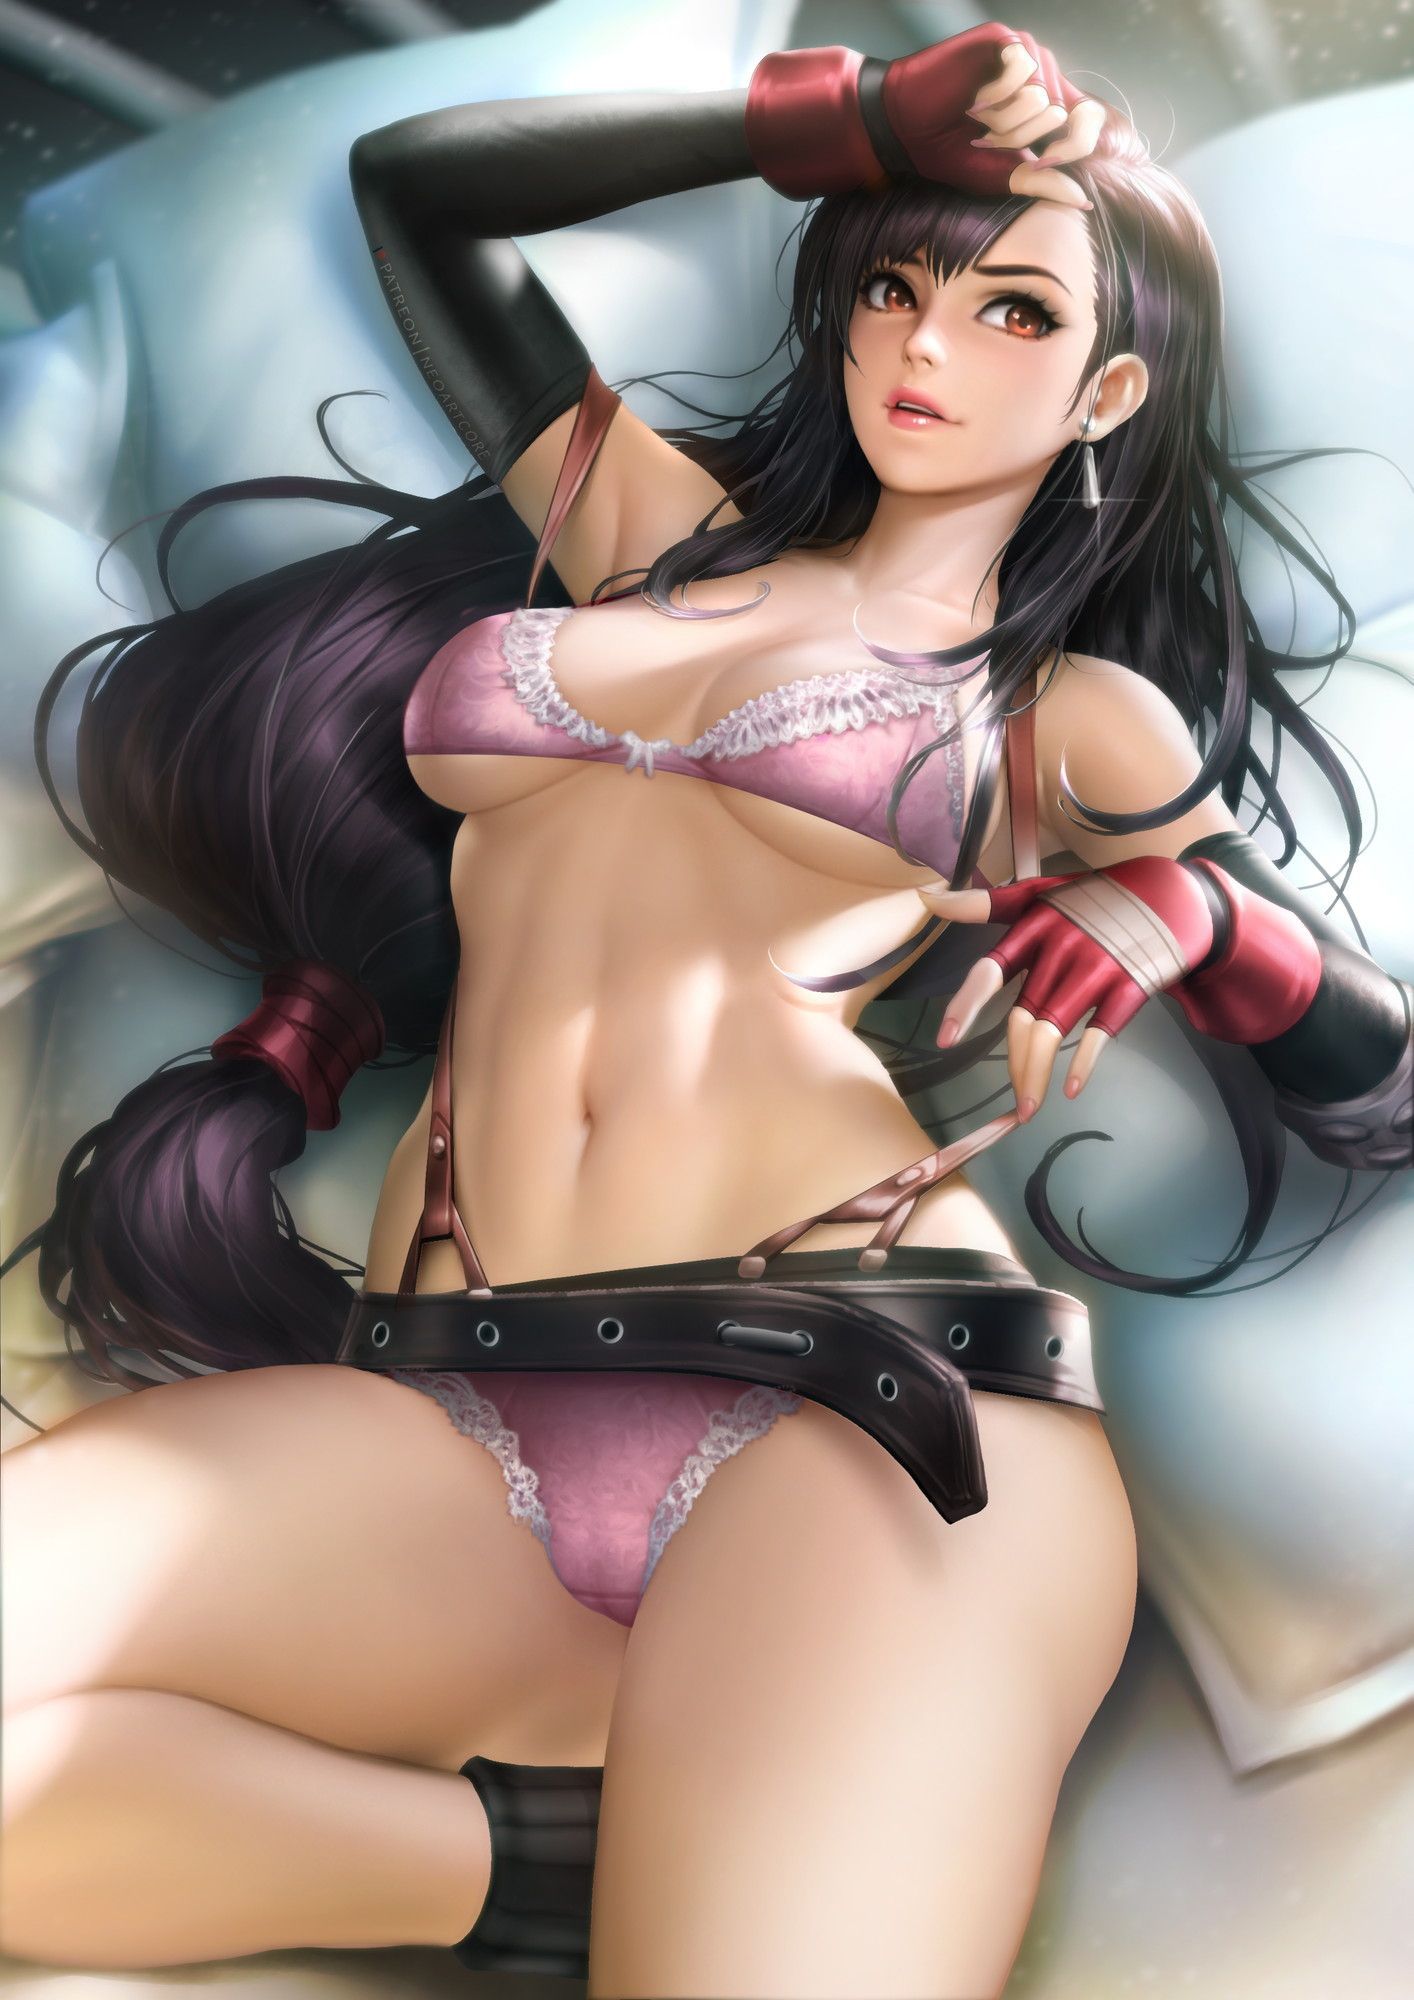 Tiffa Lockhart's throat erotic secondary erotic images are full of boobs! 【Final Fantasy】 10